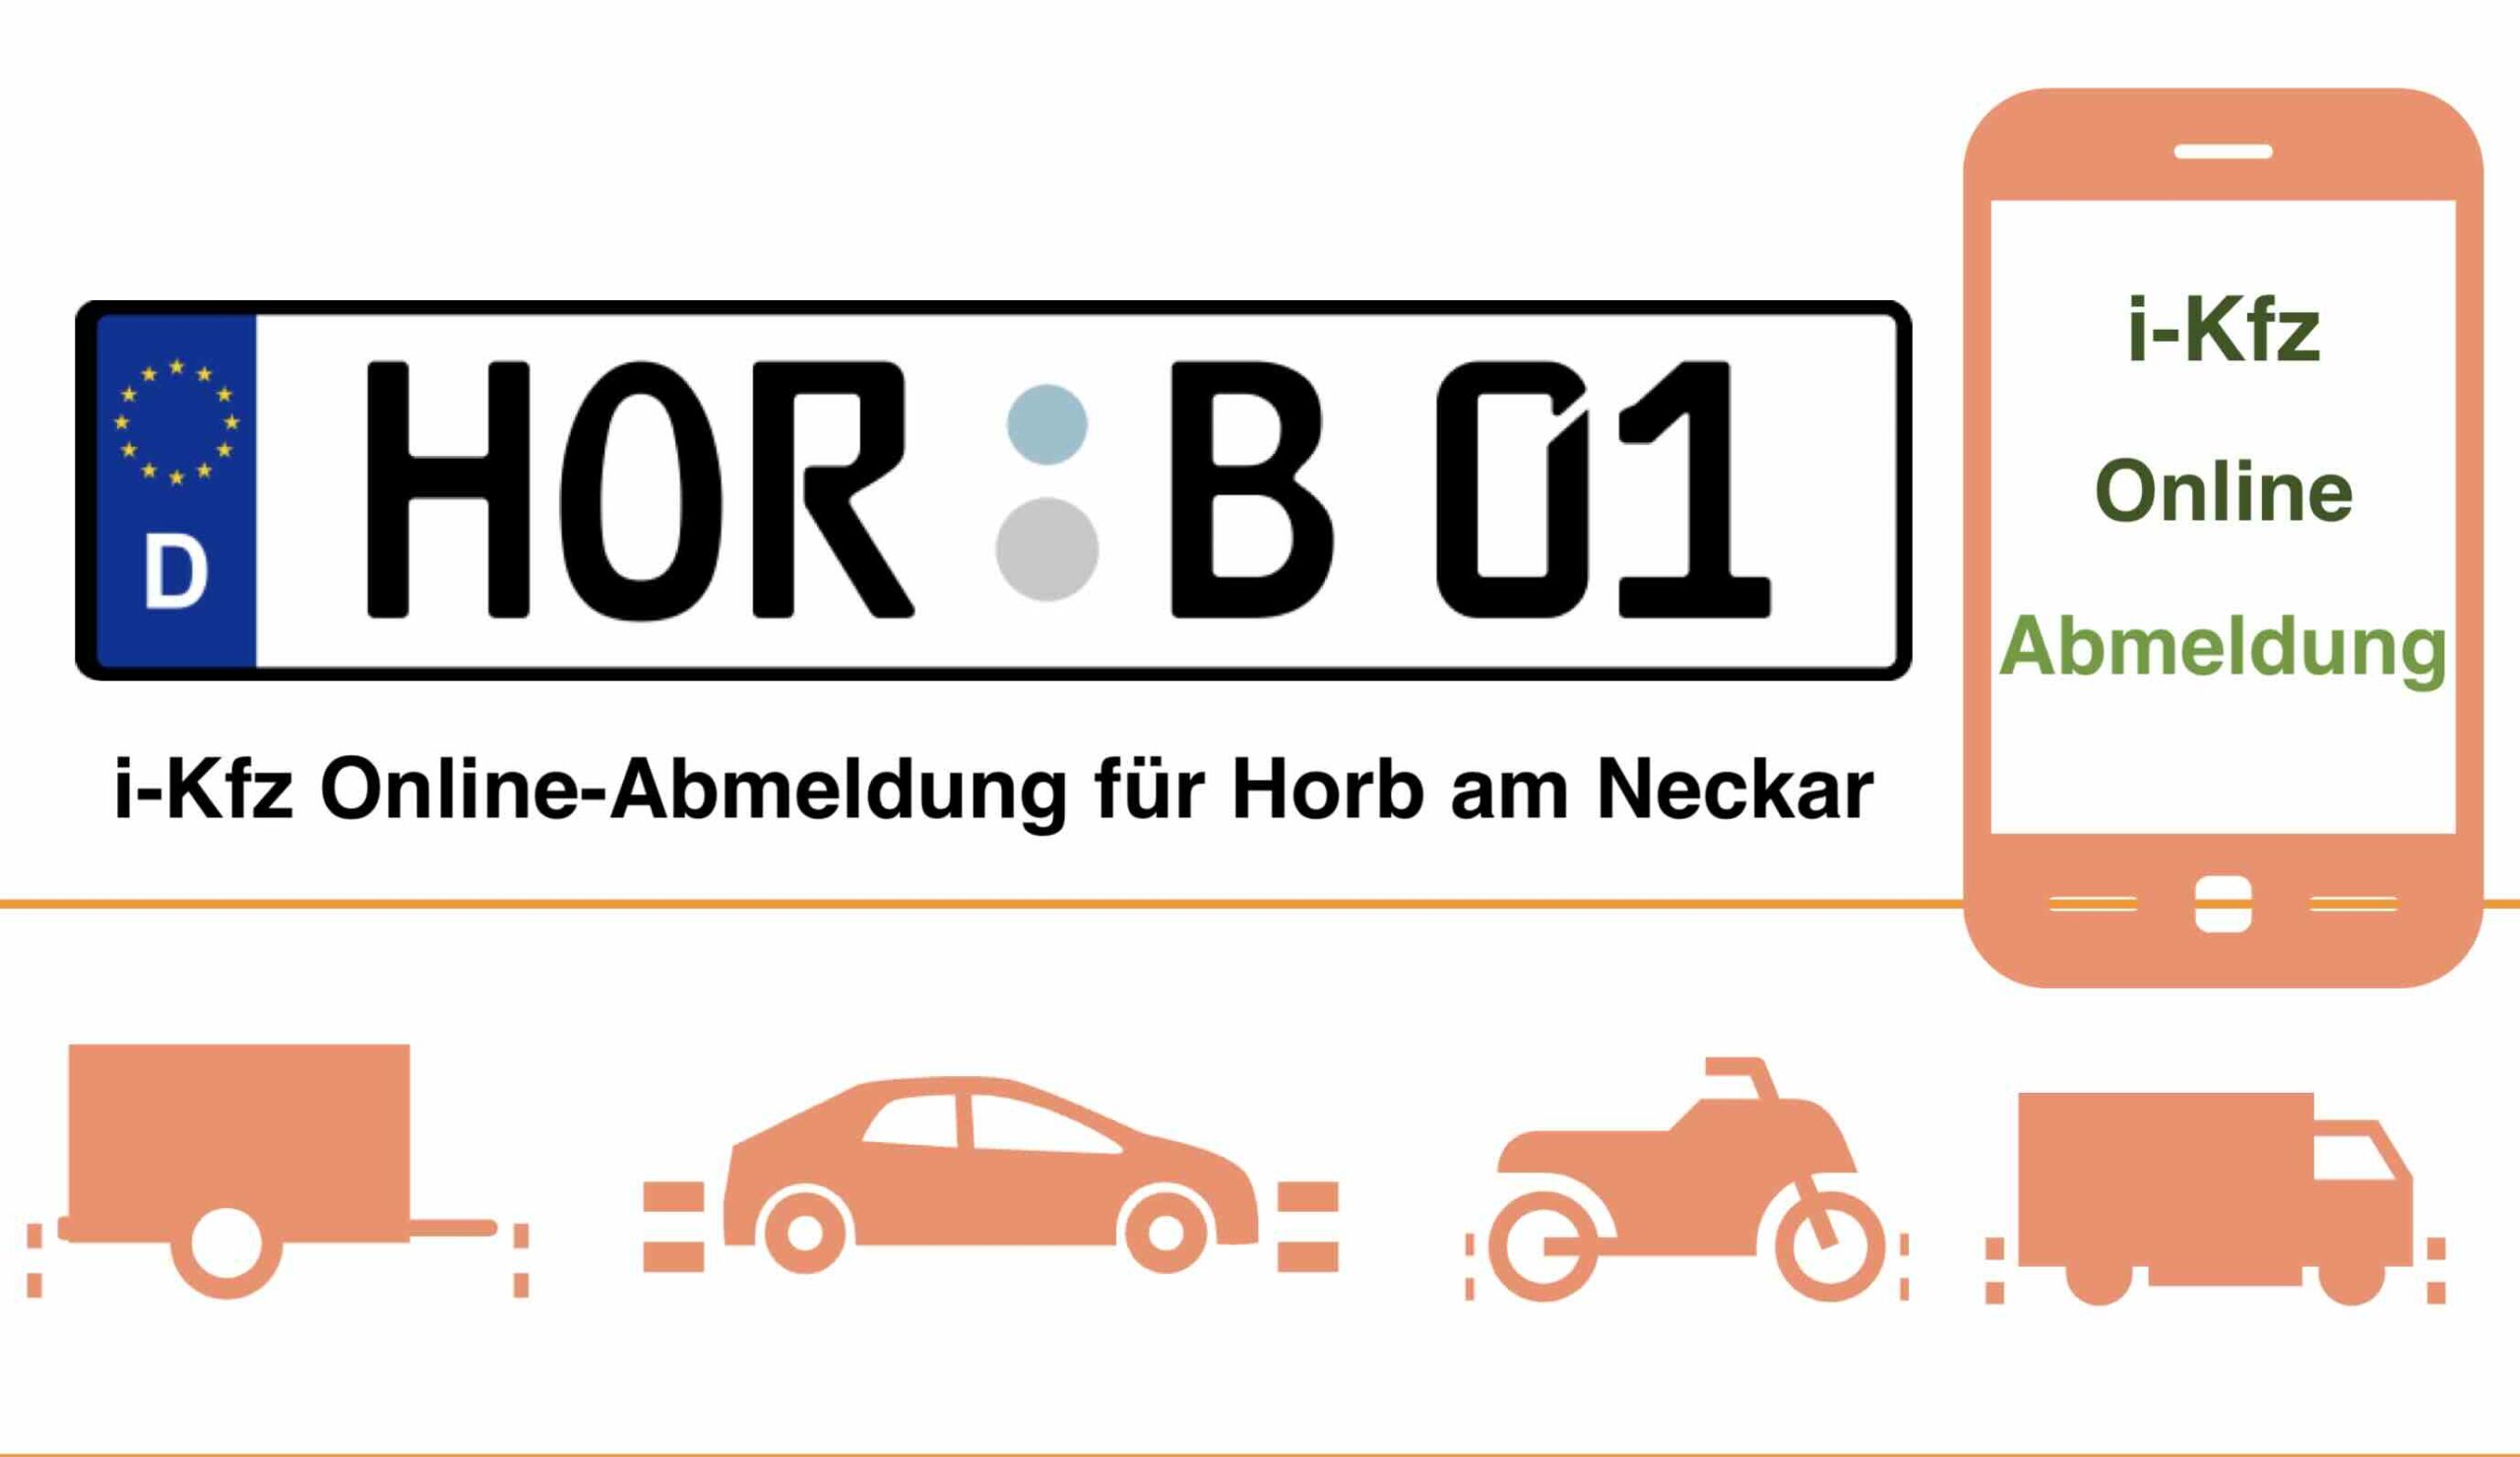 Online-Abmeldung für Horb am Neckar